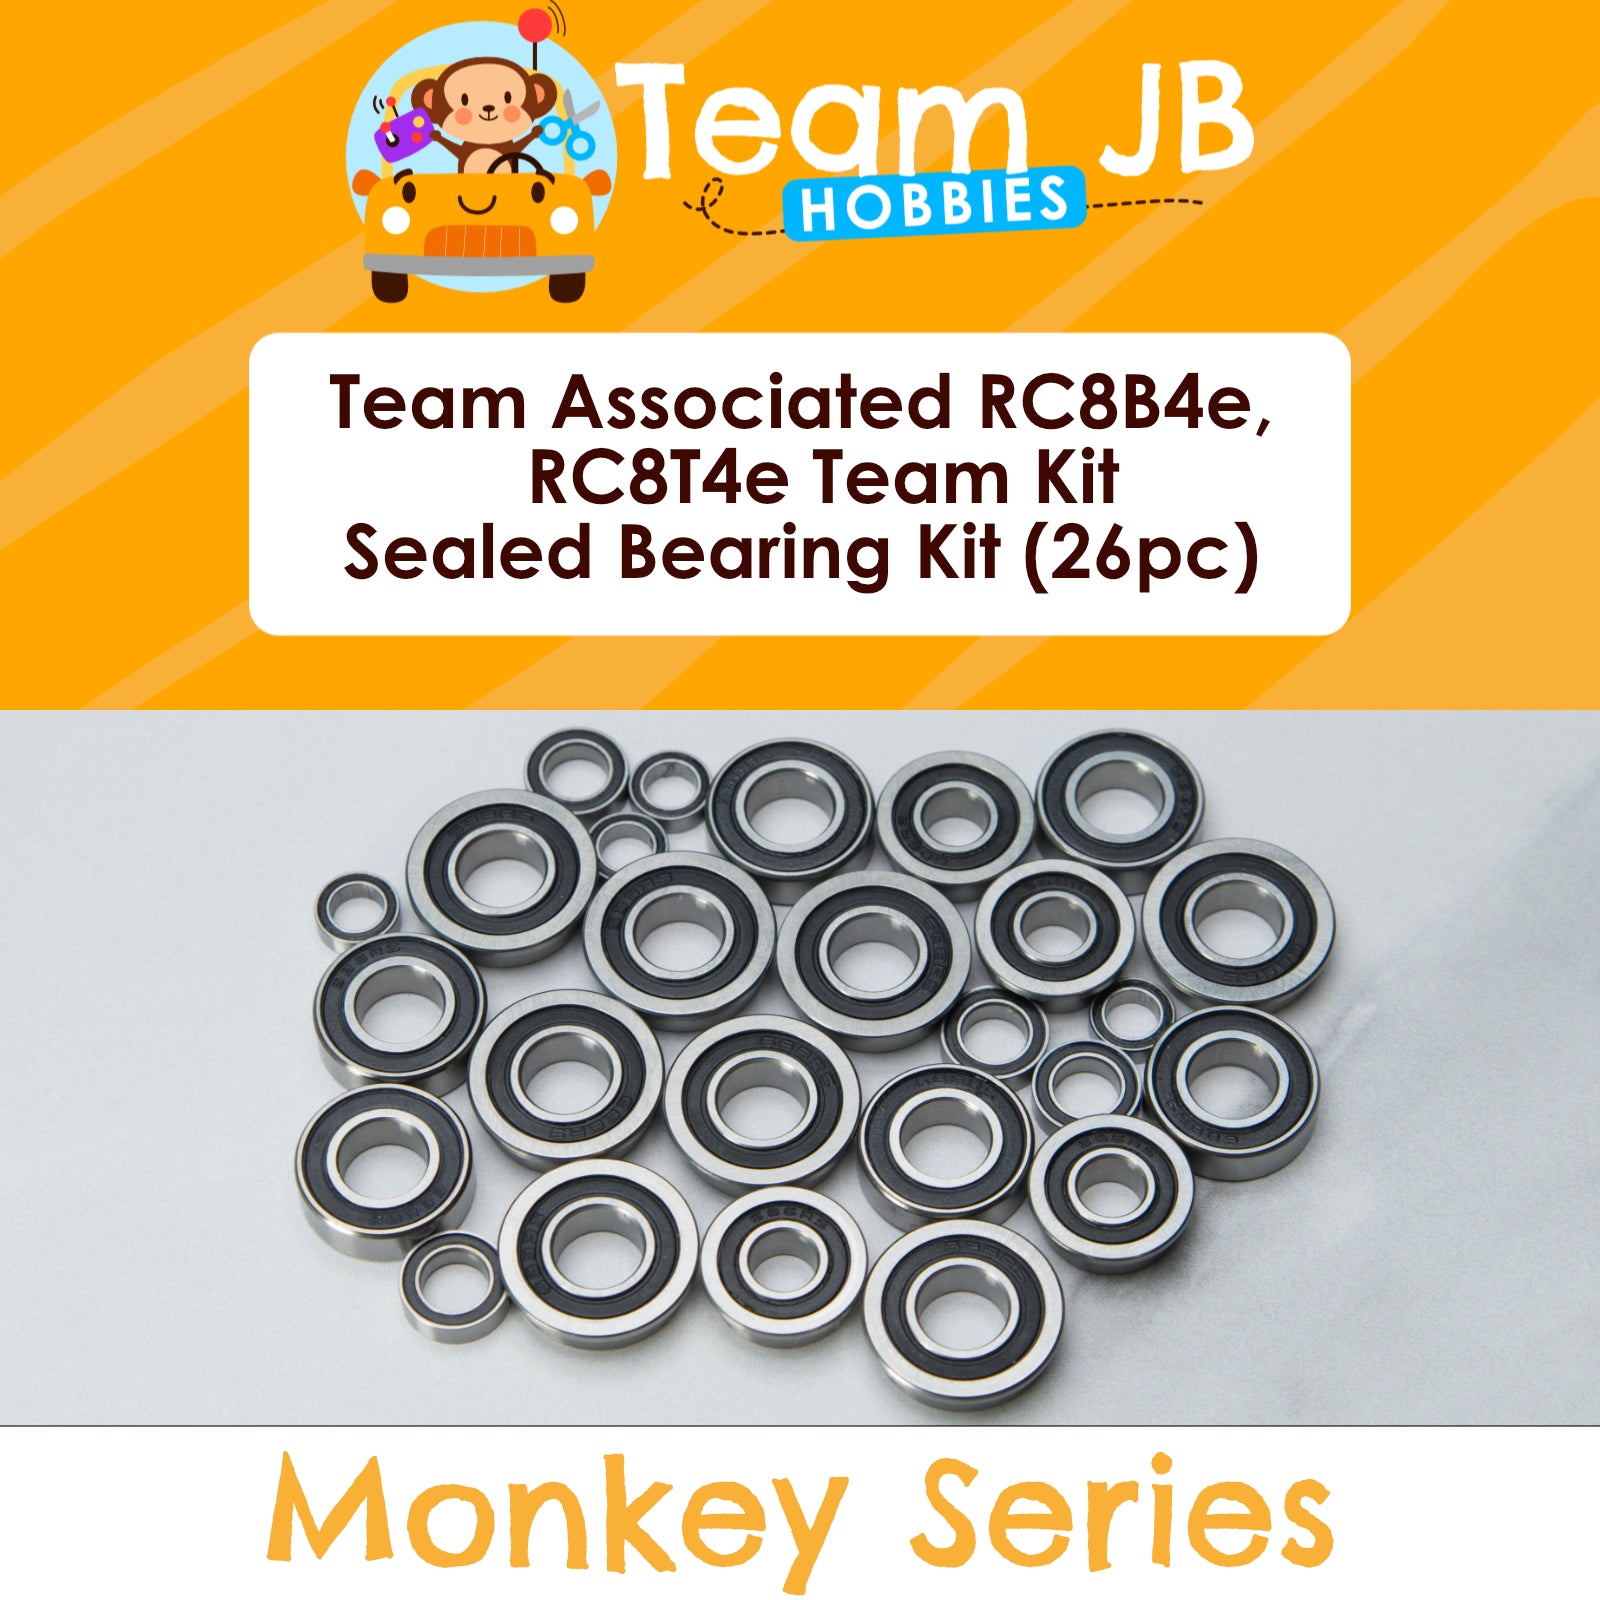 Team Associated RC8B4e Team Kit, RC8T4e Team Kit - Sealed Bearing Kit